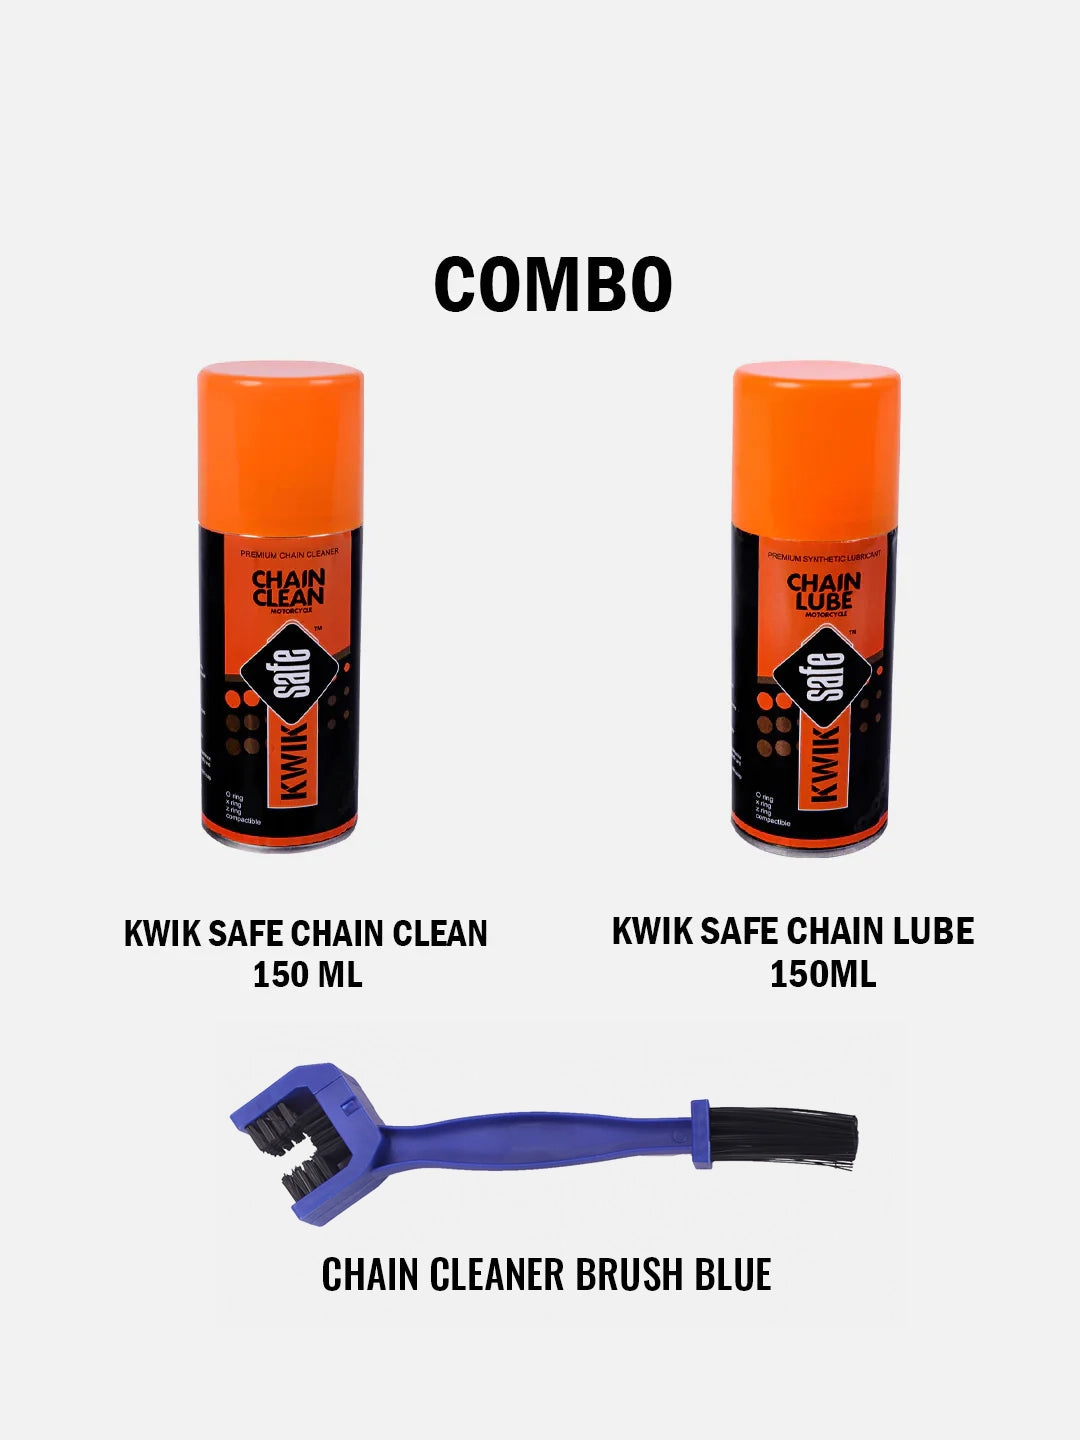 KWIK SAFE CHAIN LUBE + CHAIN CLEANER COMBO + Brush